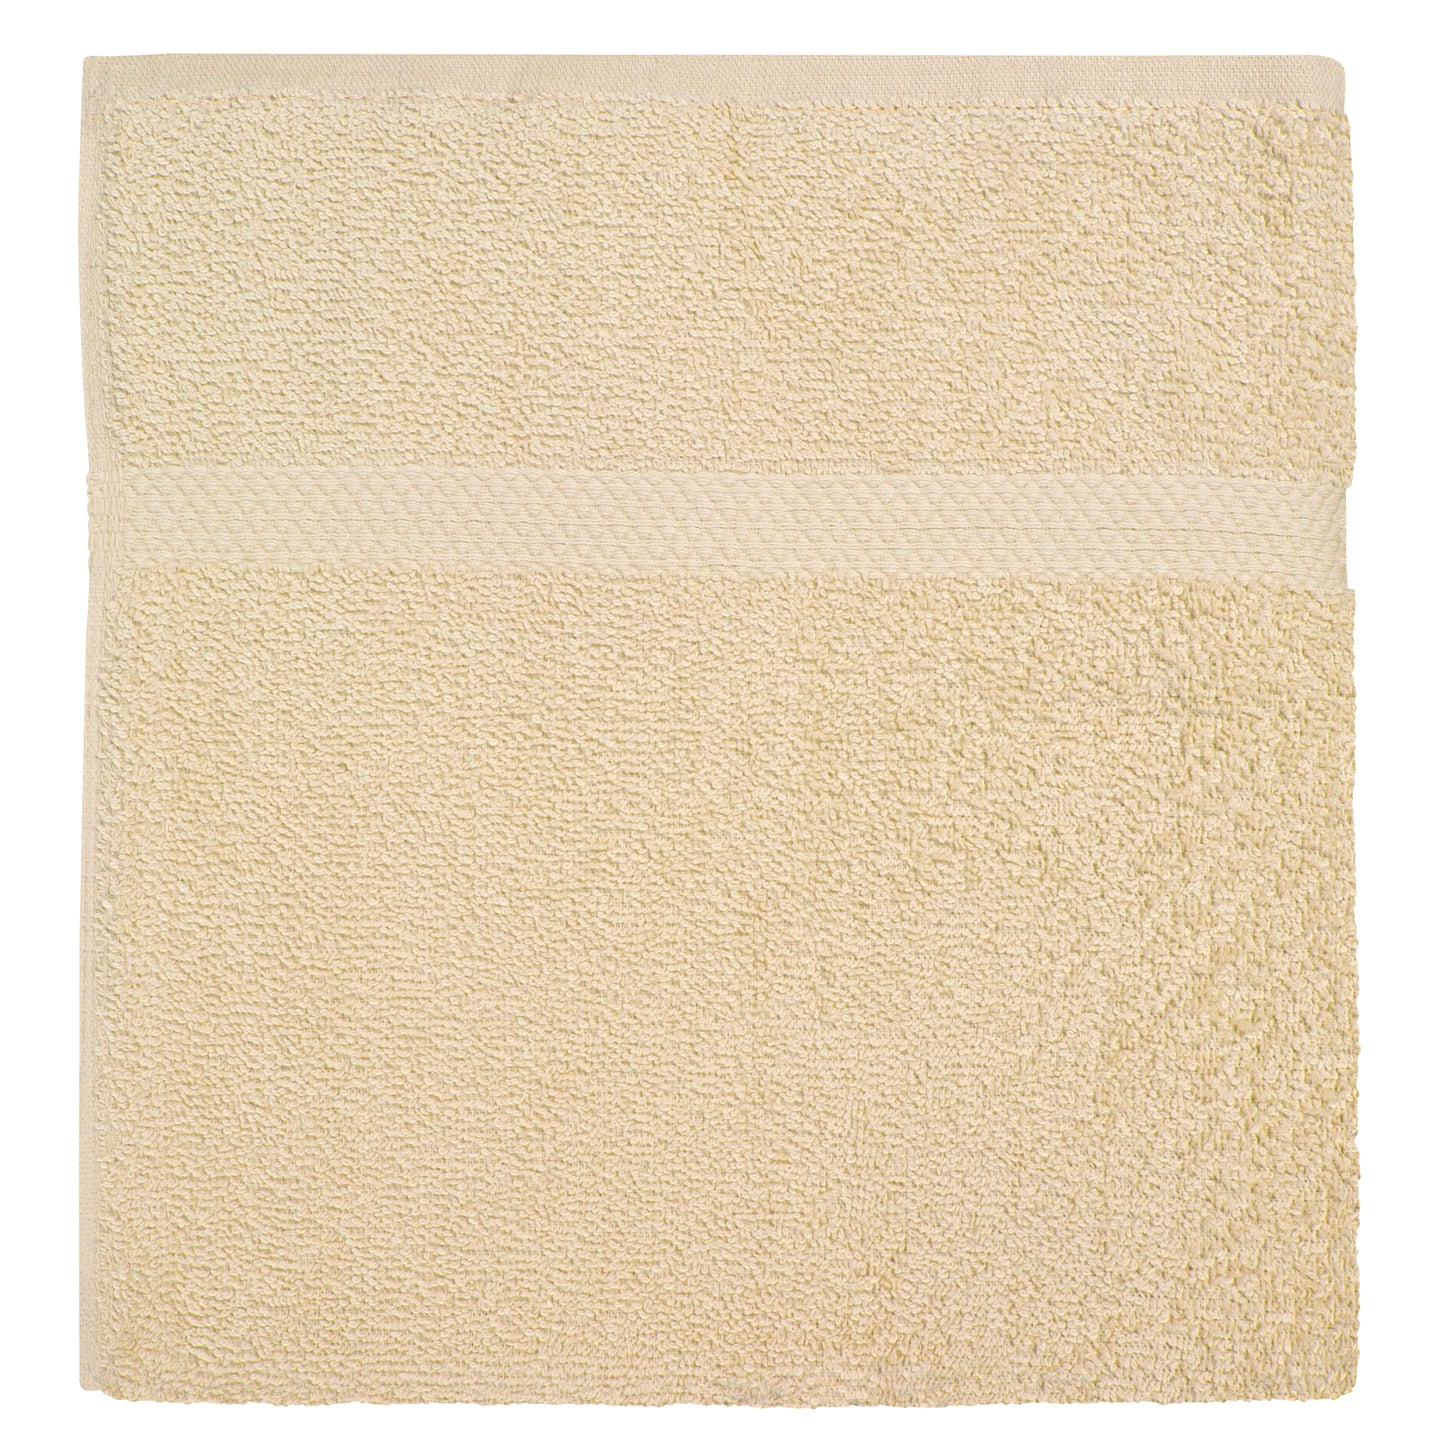 Premium Bath Towel, 24x50 inch, Vat Dyed, Dobby Border, Bone